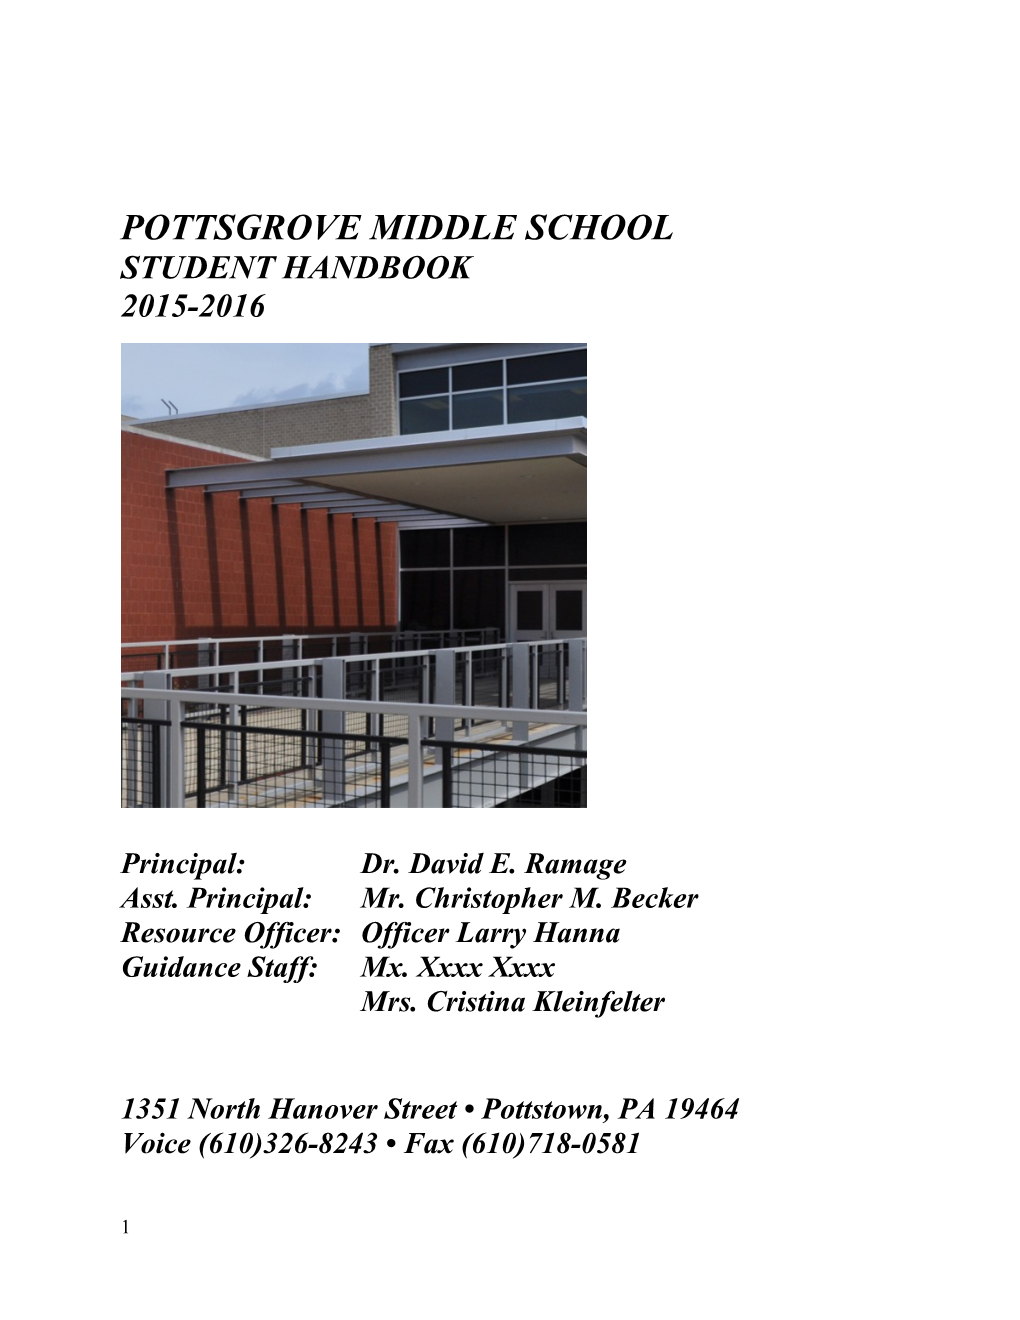 Pottsgrove Middle School